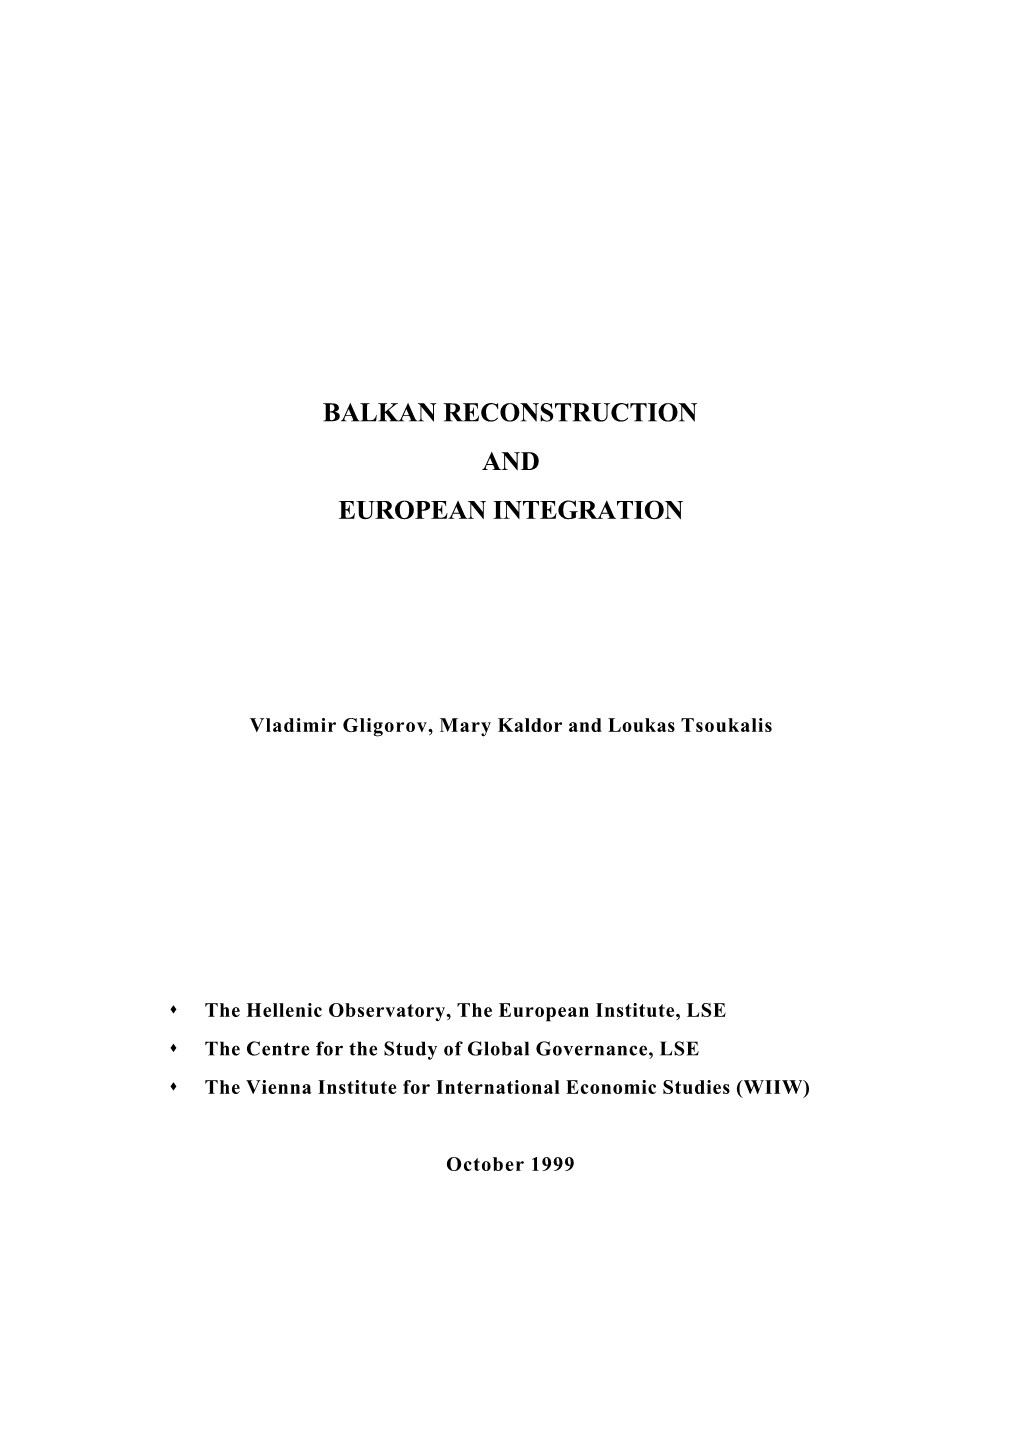 Balkan Reconstruction and European Integration